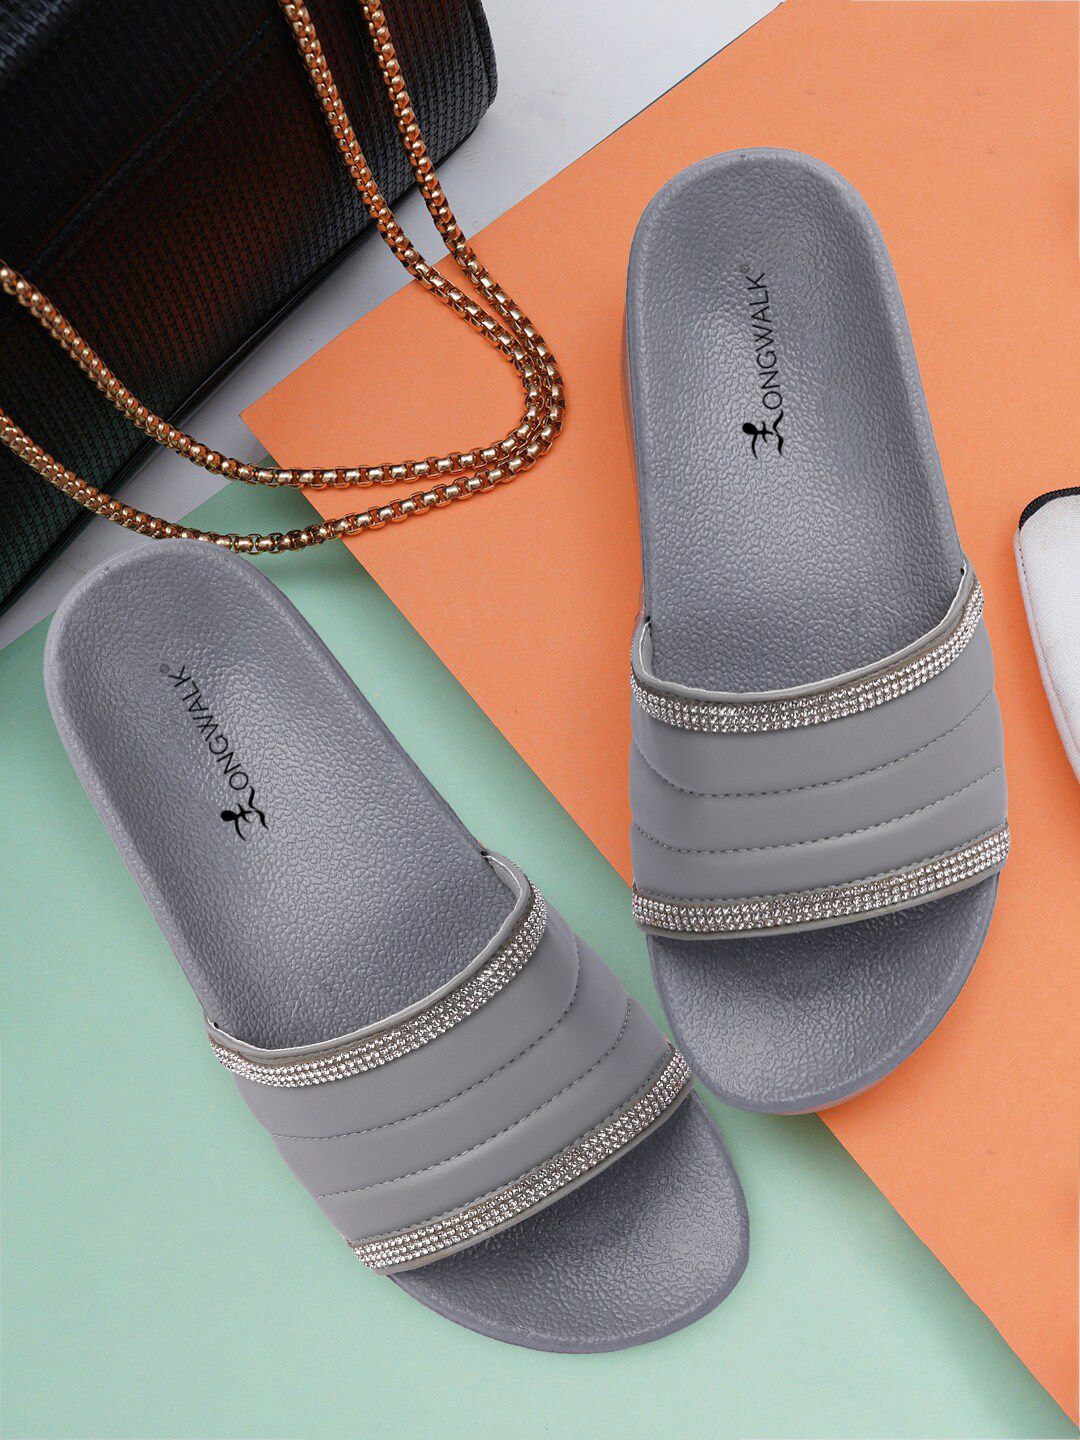 Longwalk Grey Embellished Flatform Sandals Price in India